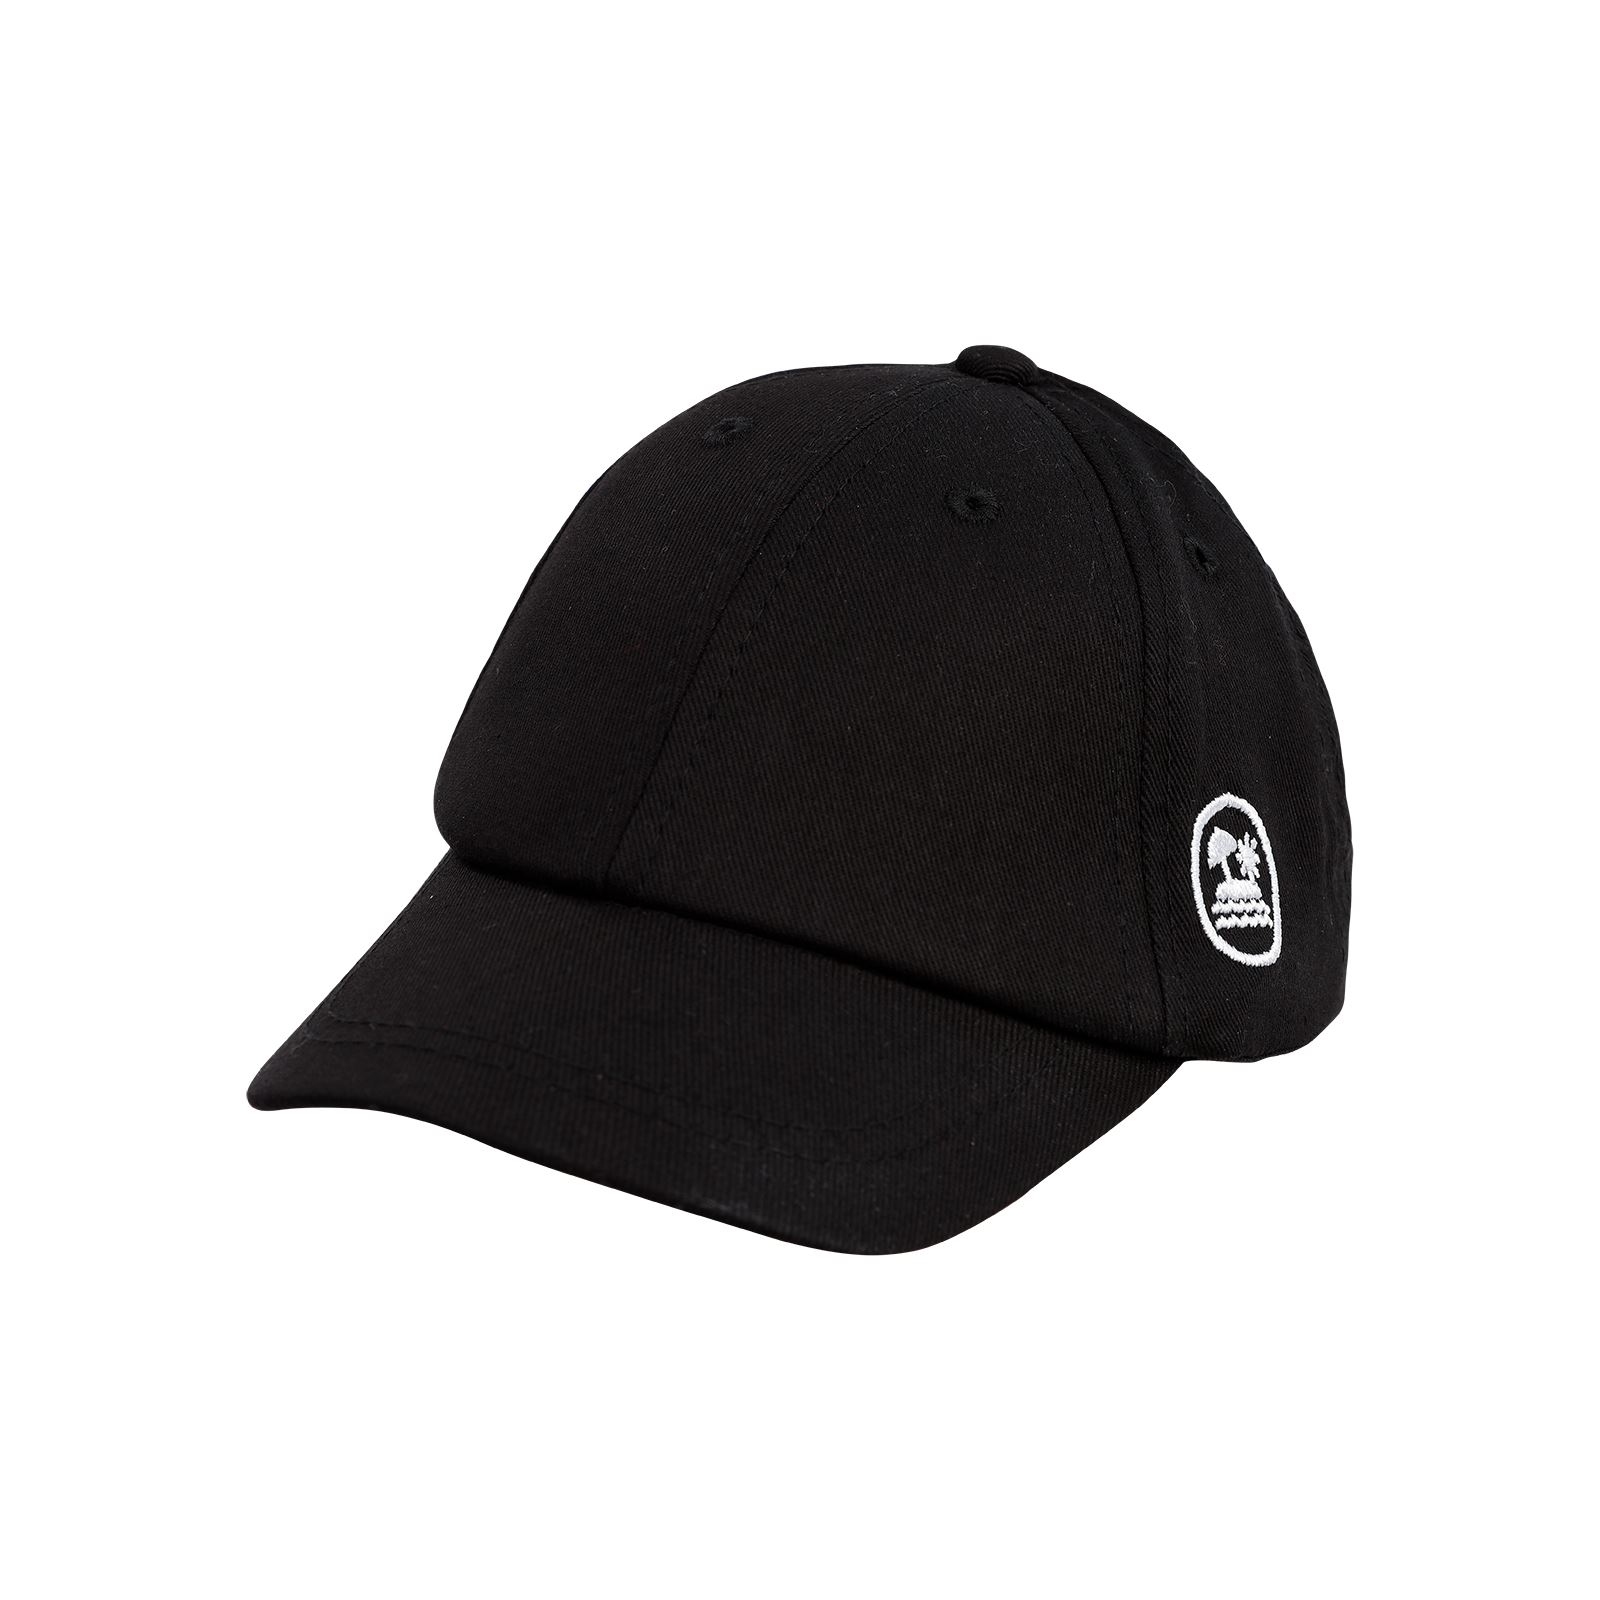 Civil Boys Erkek Çocuk Kep Şapka 2-5 Yaş Siyah